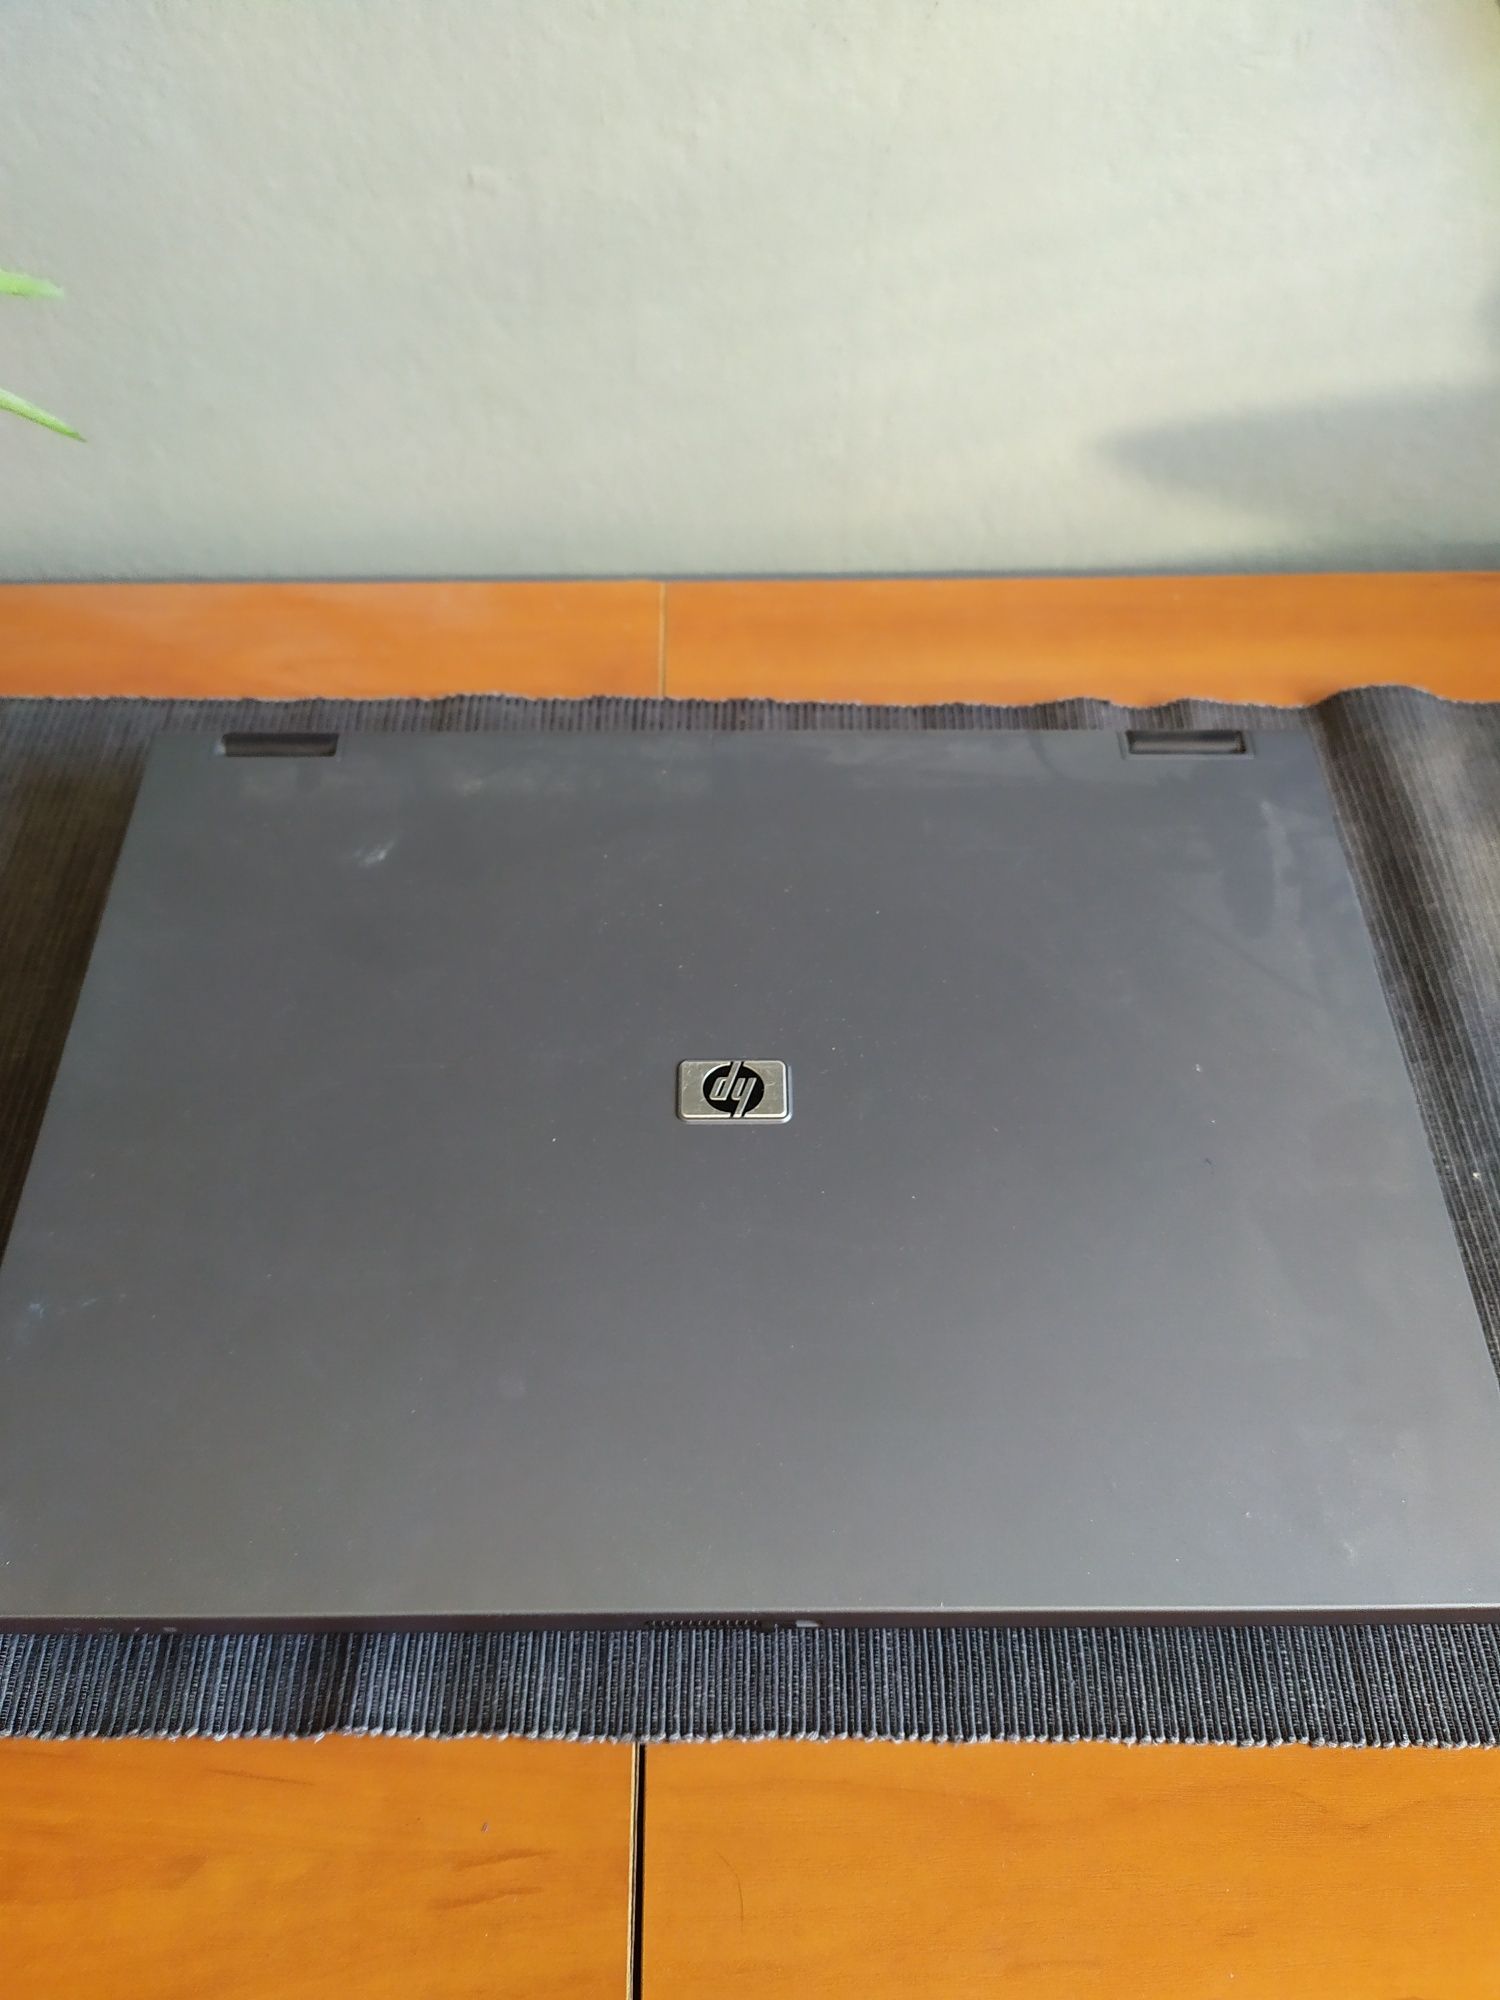 Laptop HP compaq 6715b AMD turion